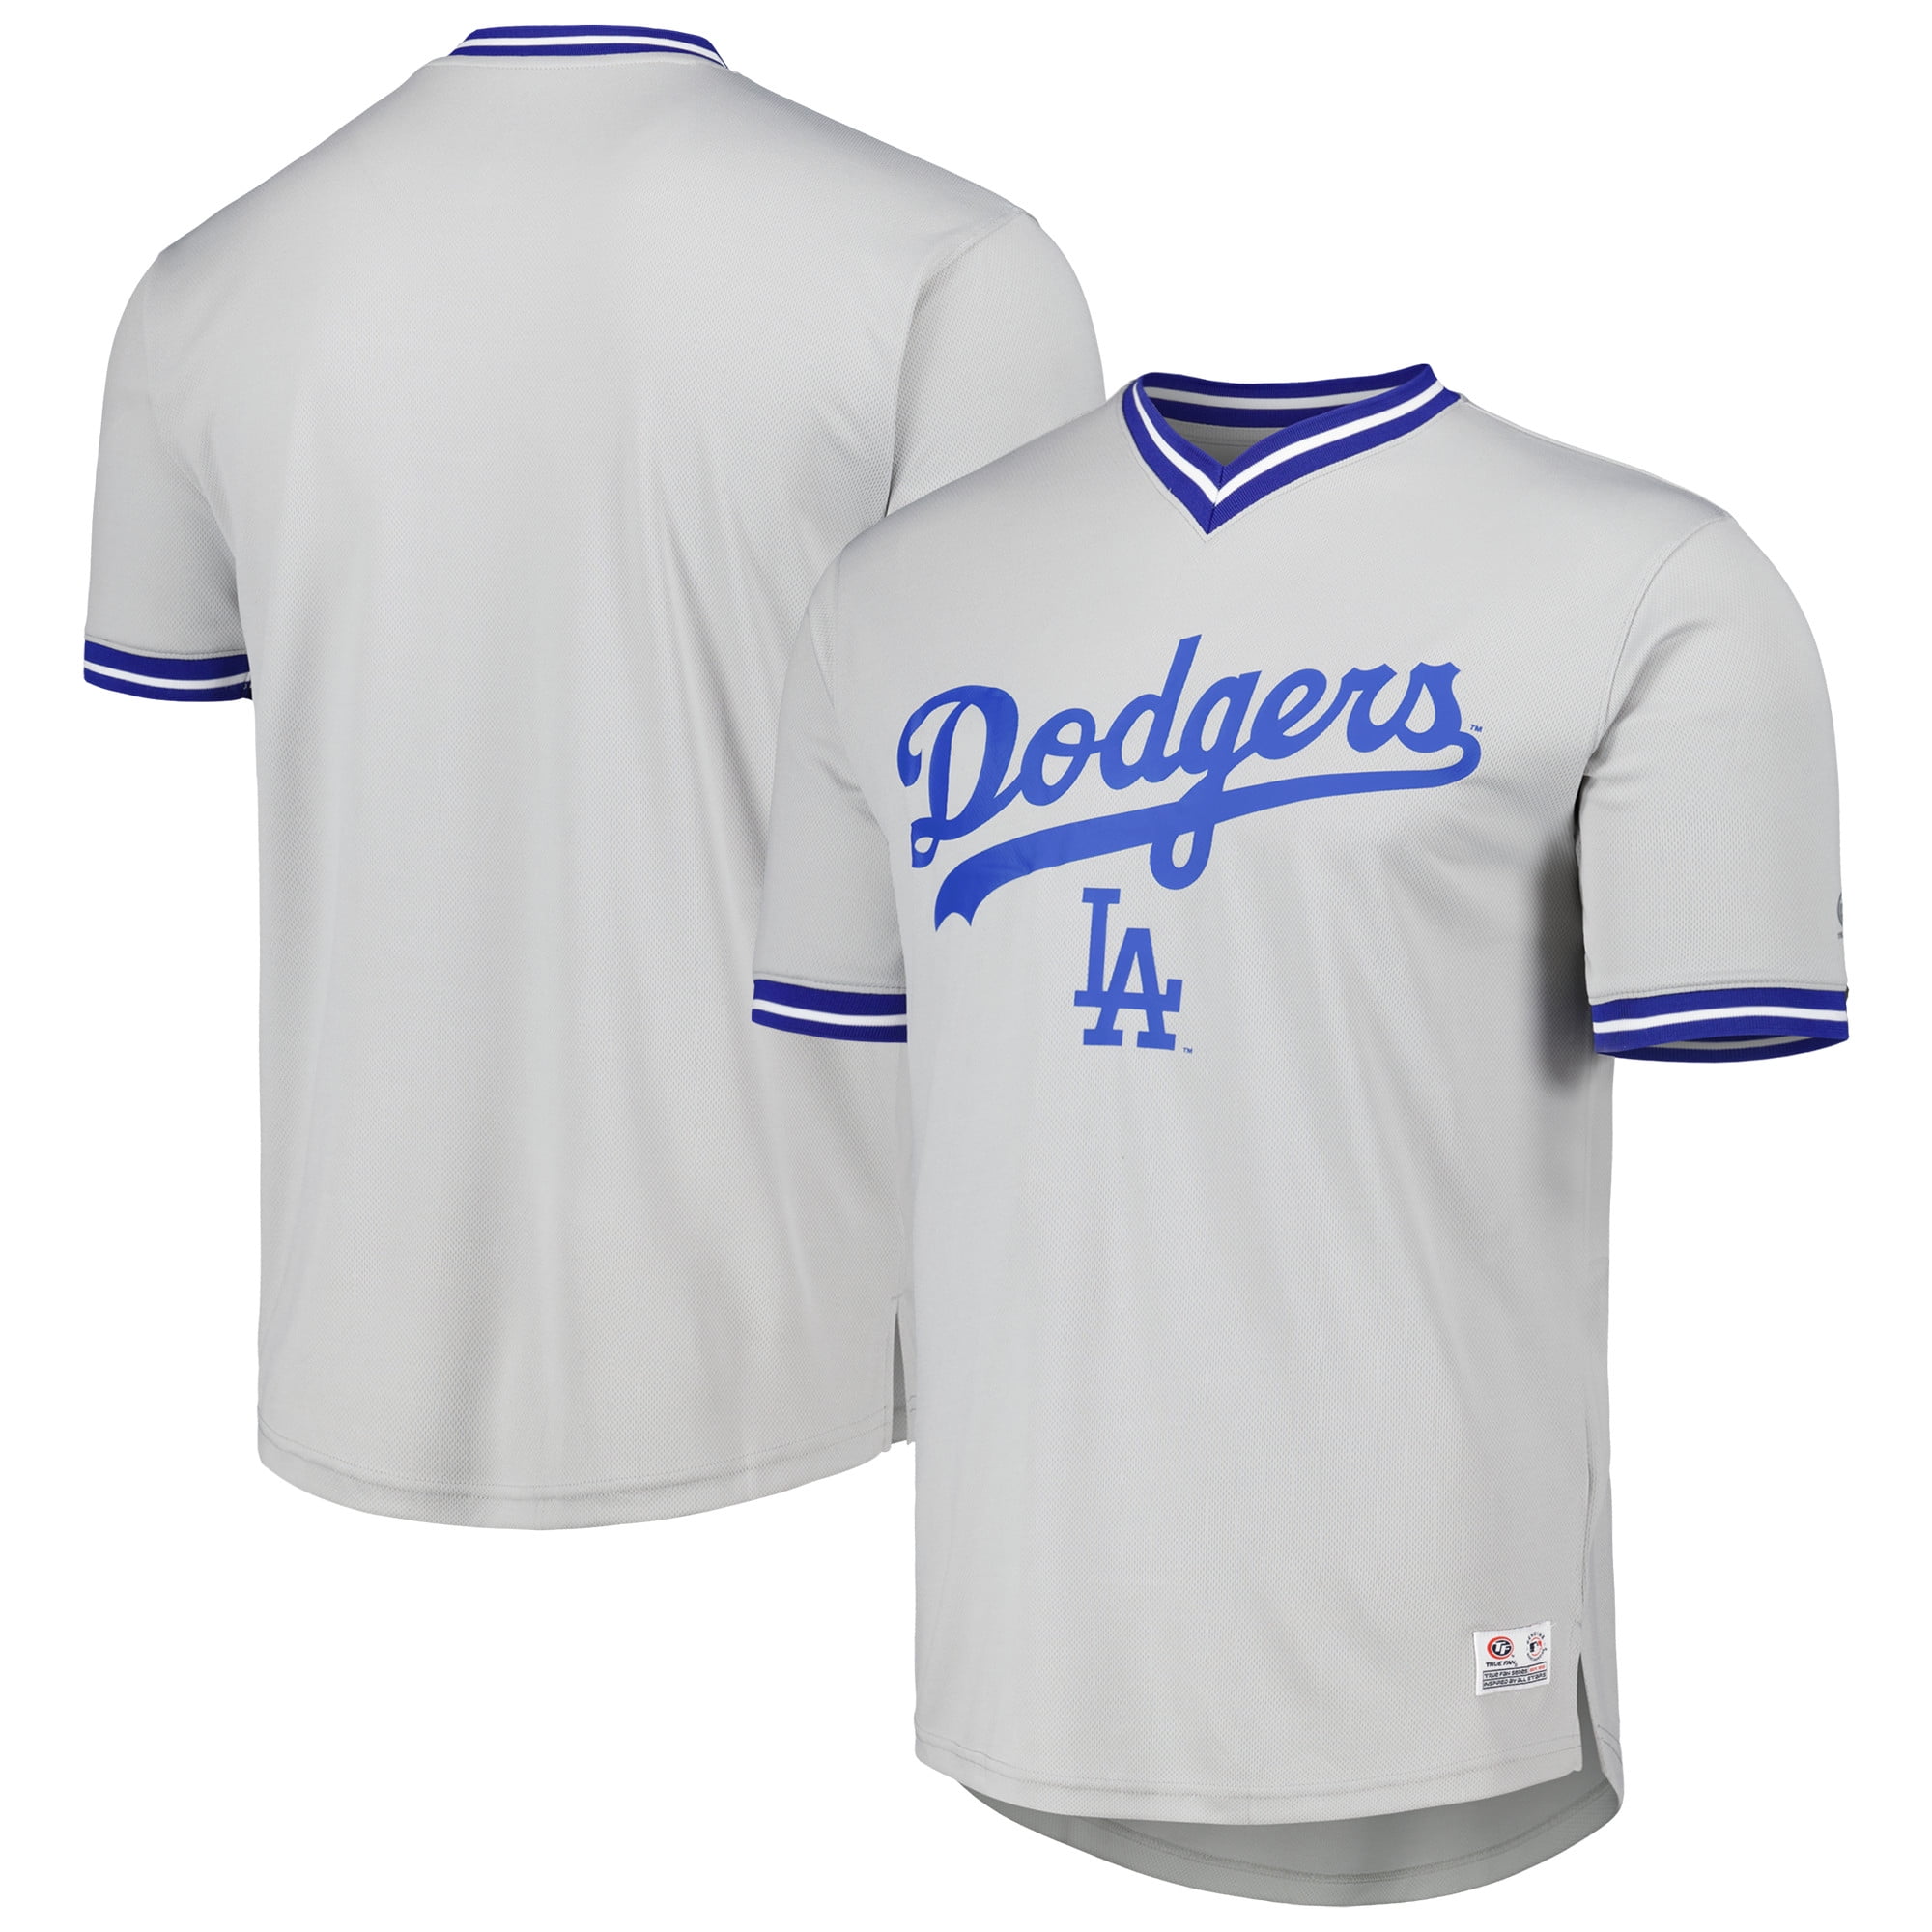 Adult Heathered Phantom Baseball Jersey - All Sports Uniforms